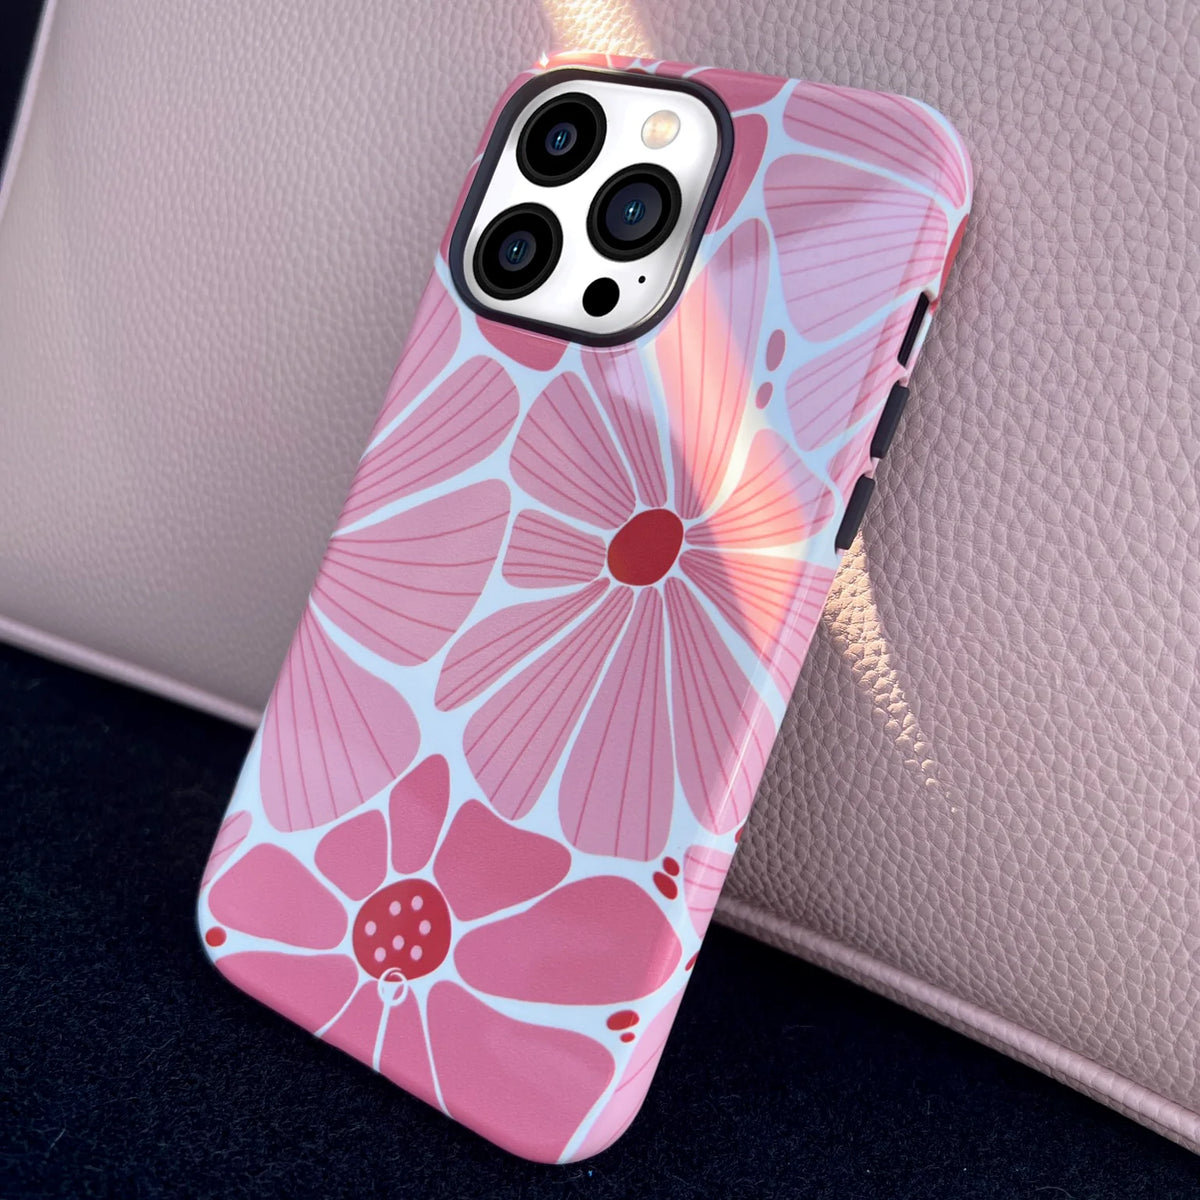 Floral Blast iPhone Case - iPhone 12